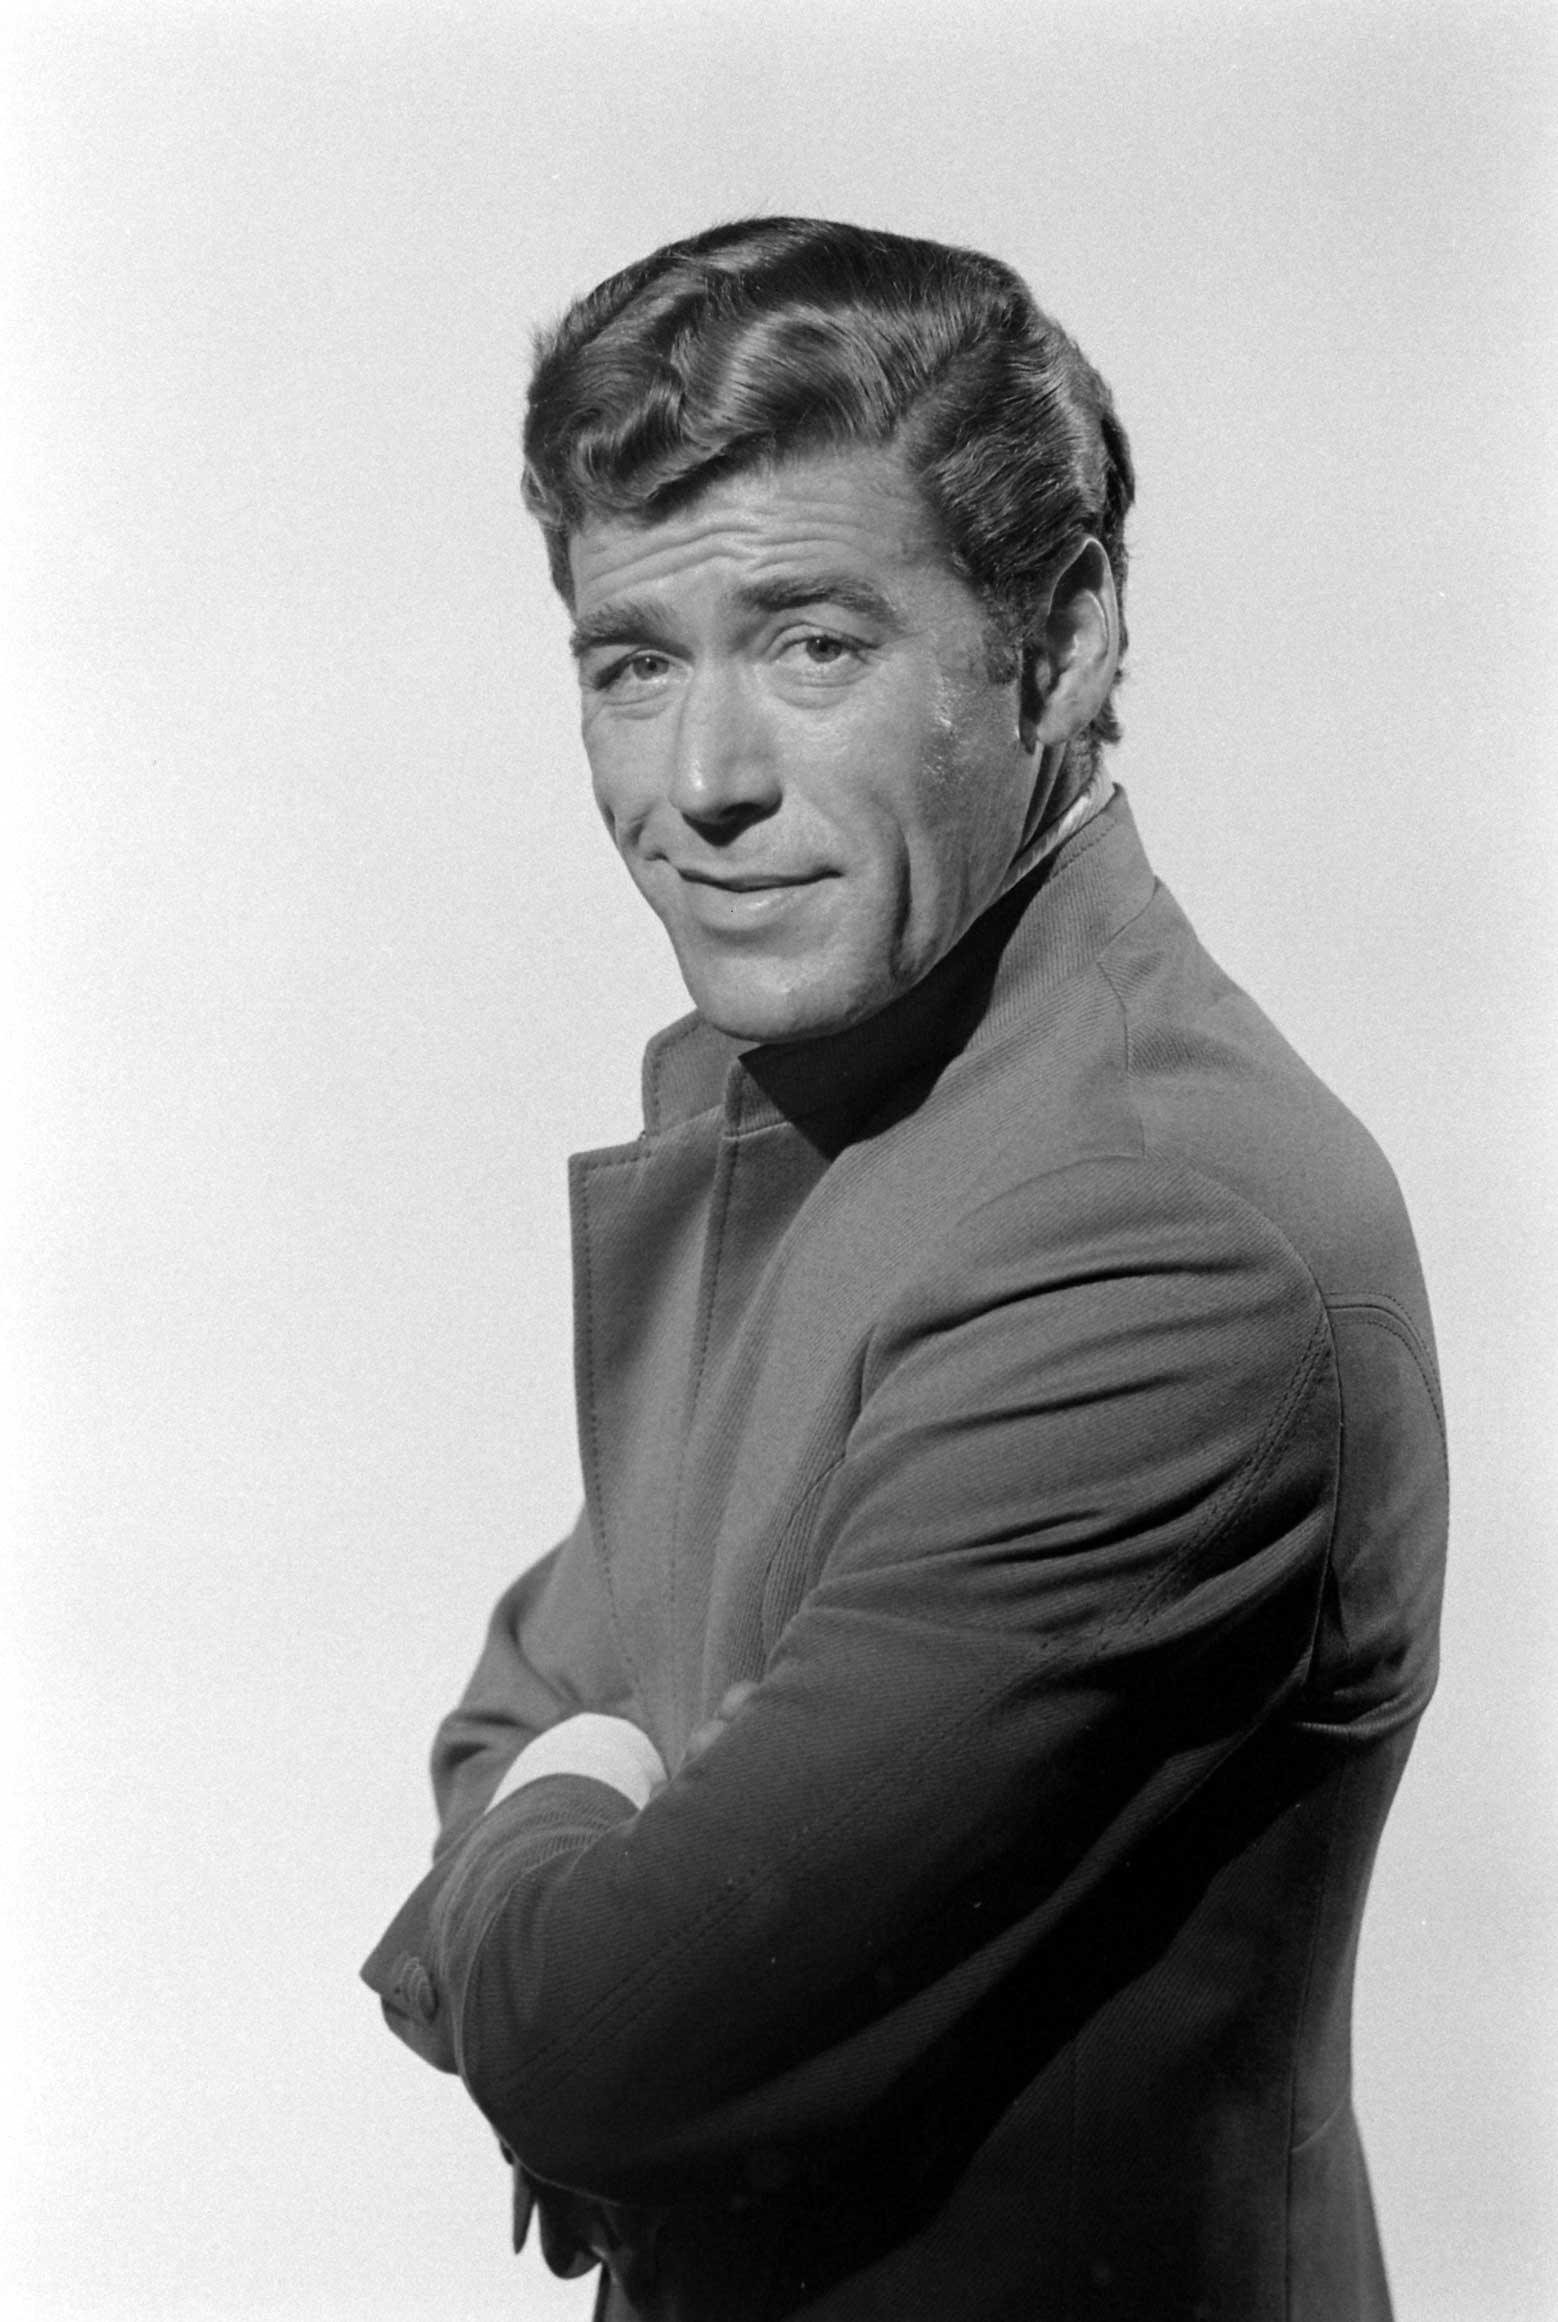 James Bond audition finalist Anthony Rogers, 1967.